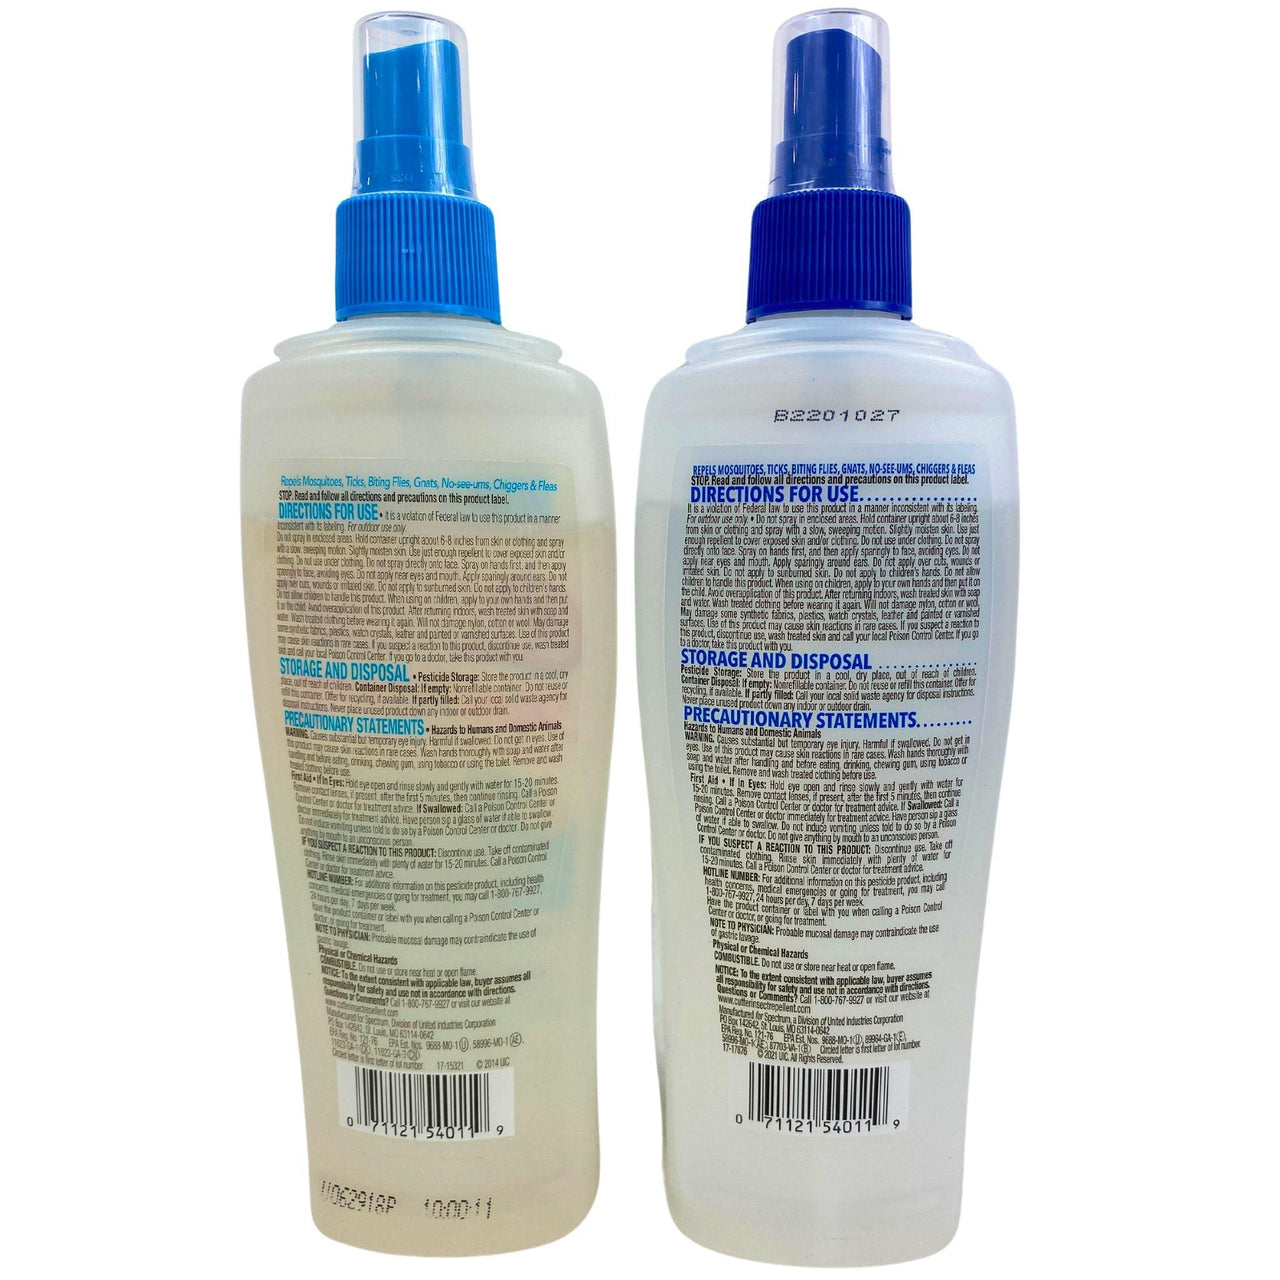 Cutter Skinsations Insect Repellent Aloe & Vitamin E (50 Pcs Lot) - Discount Wholesalers Inc